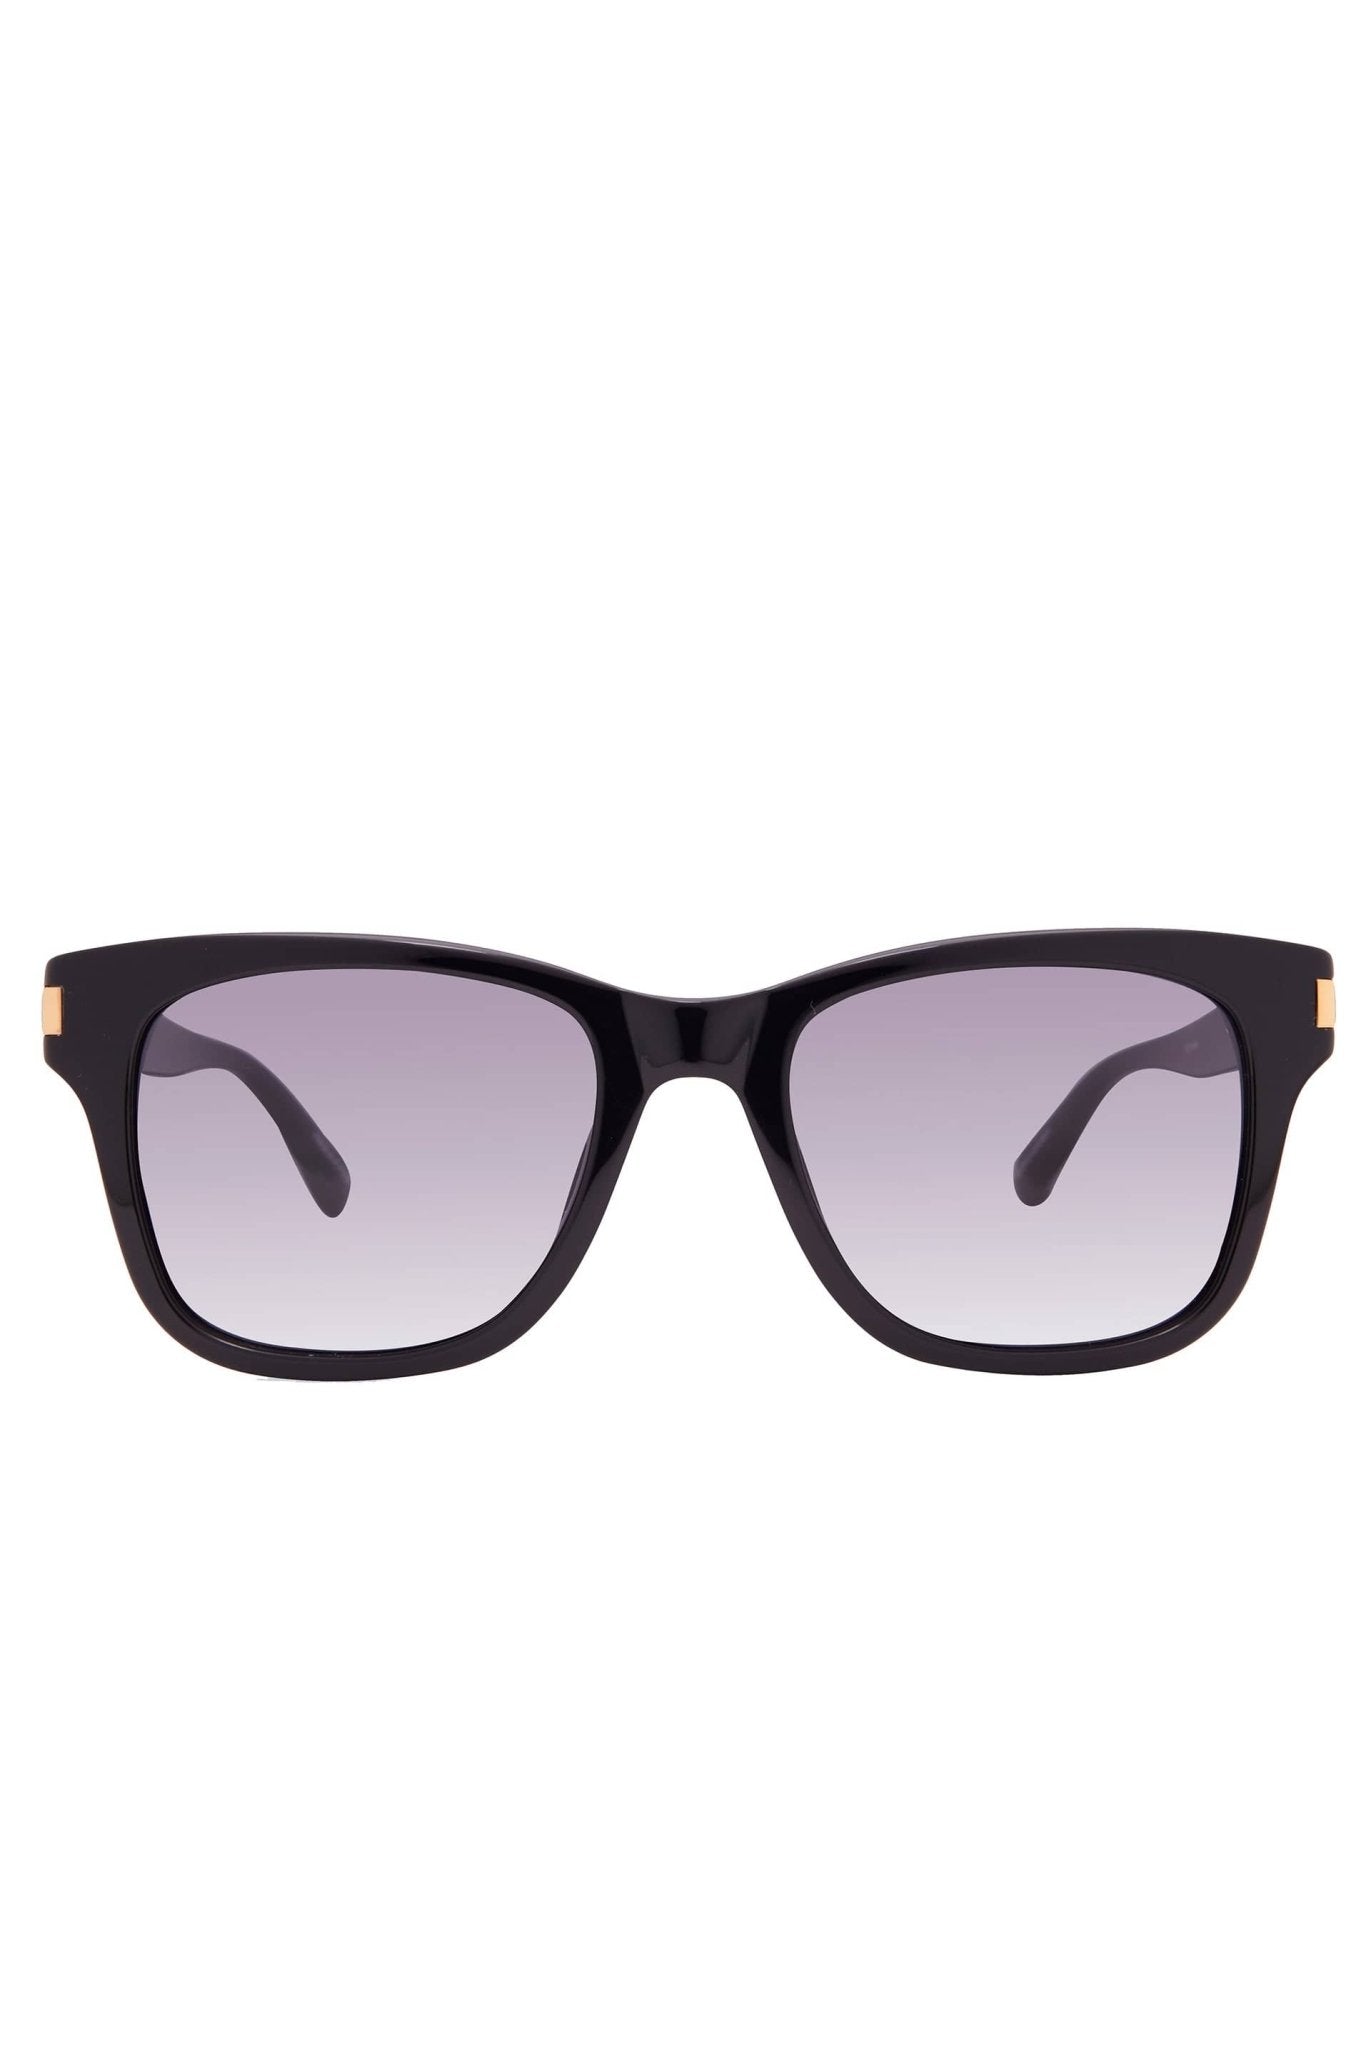 The Audrey Sunglasses in Black - Heidi Klein - UK Store